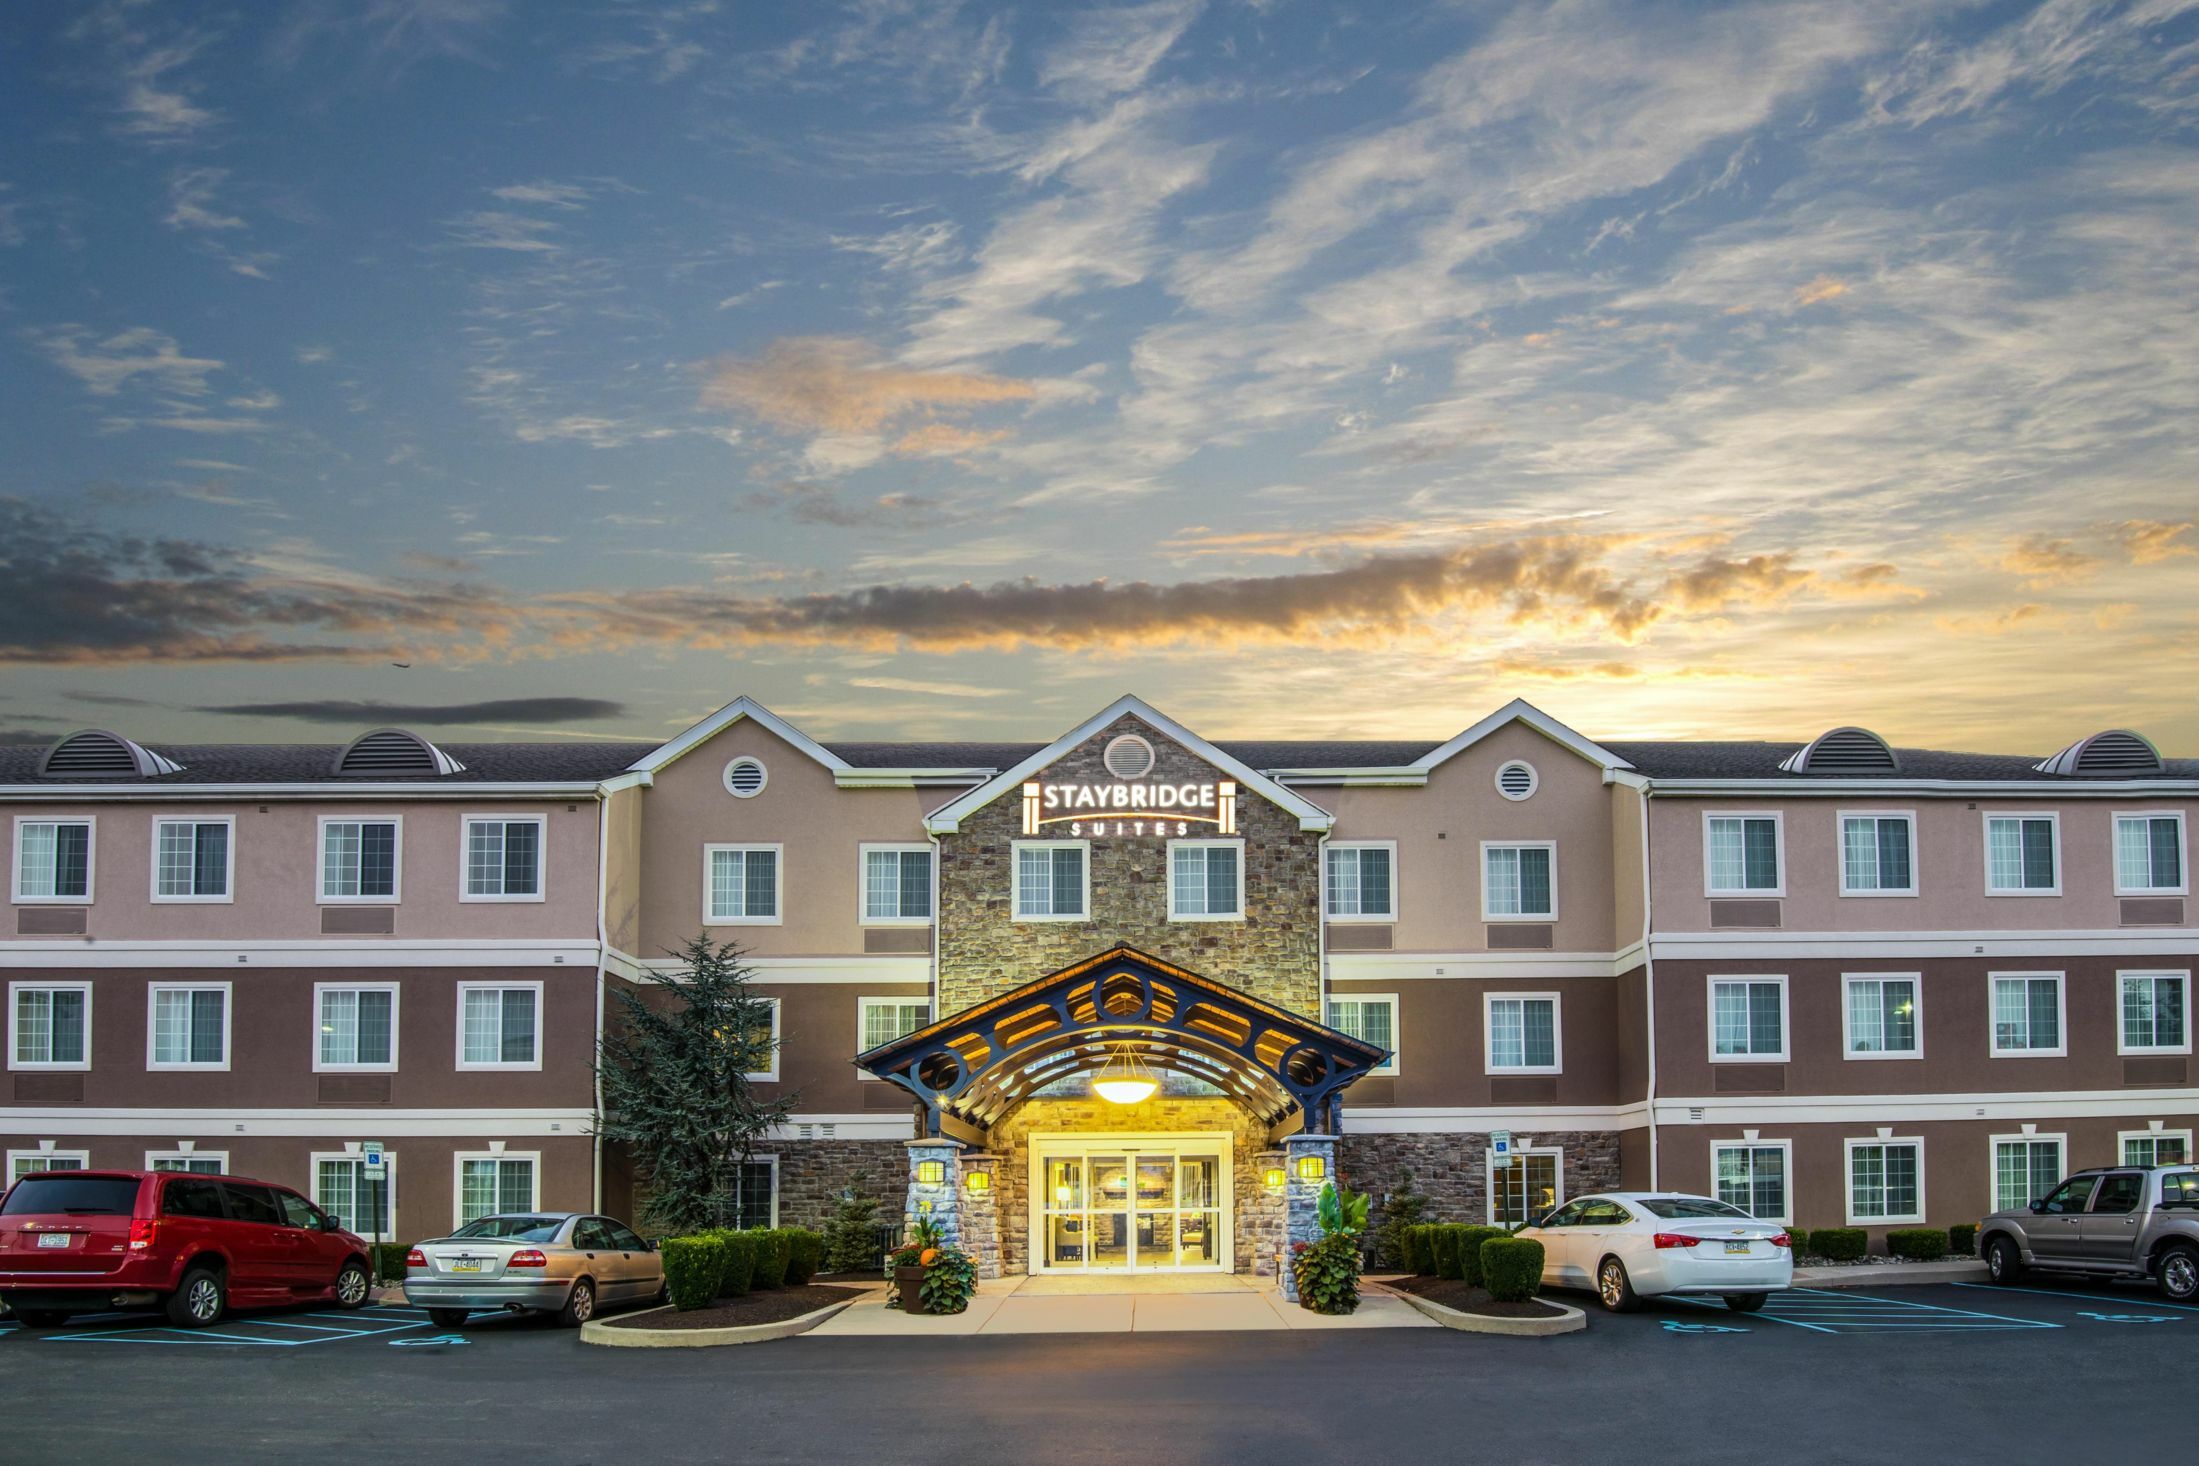 Photo of Staybridge Suites Allentown West, Allentown, PA